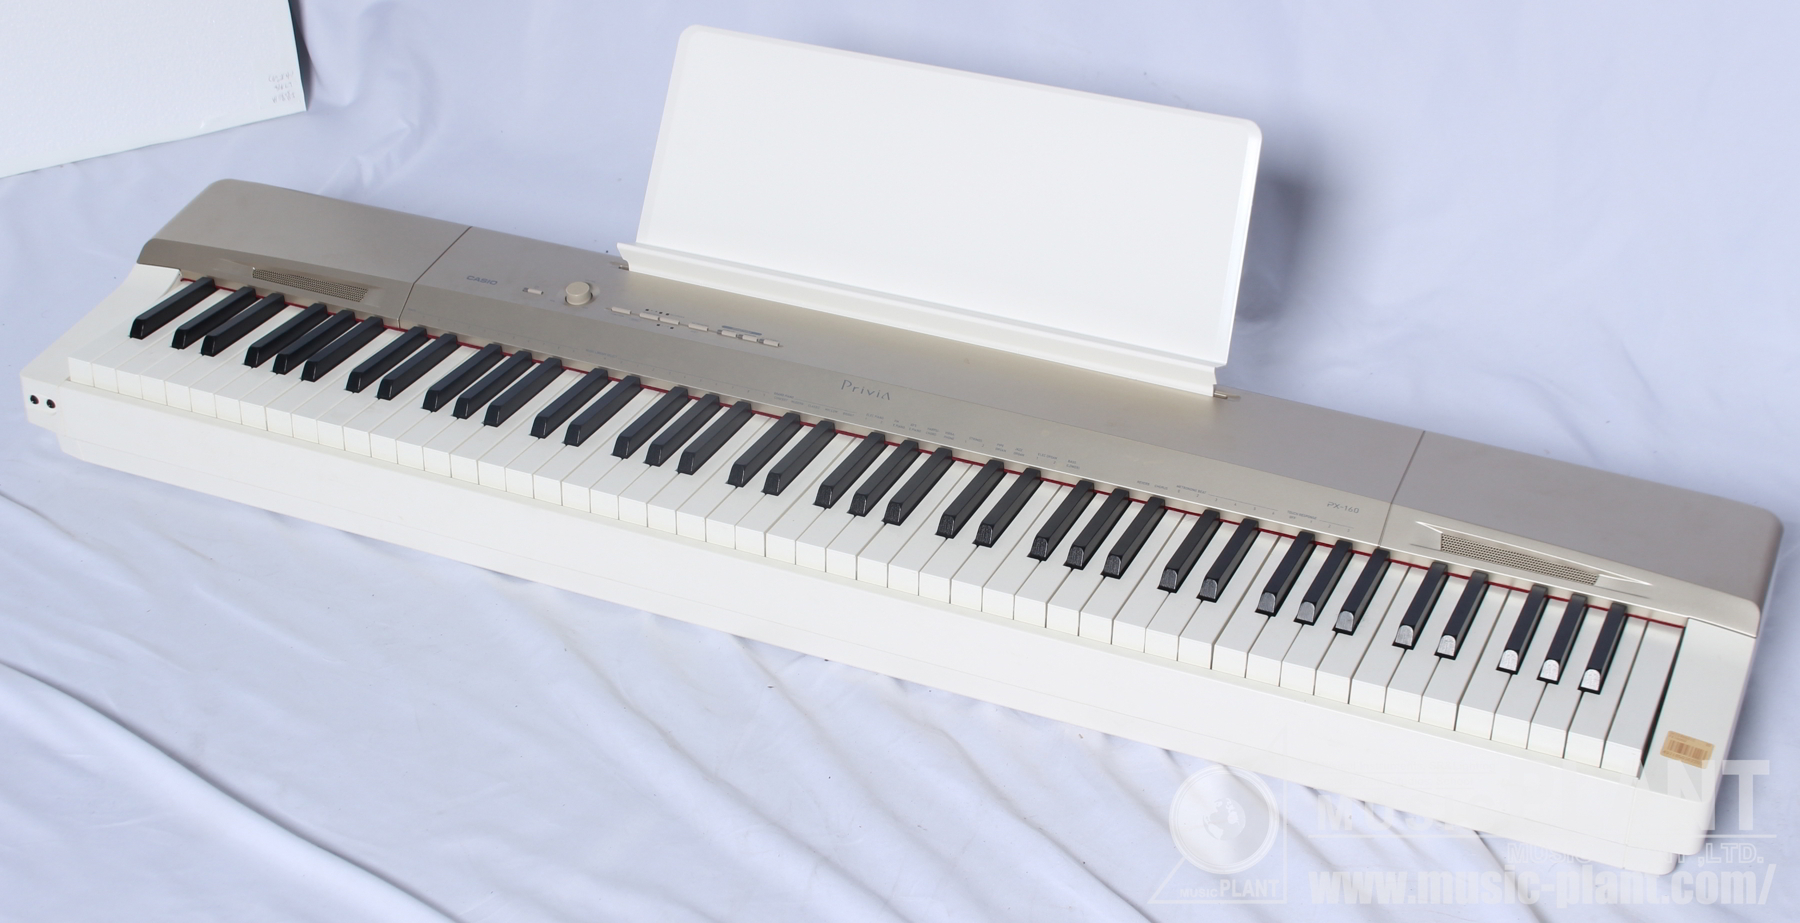 CASIO Priviaシリーズ 電子ピアノPX-160GD中古品()売却済みです。あしからずご了承ください。 | MUSIC PLANT